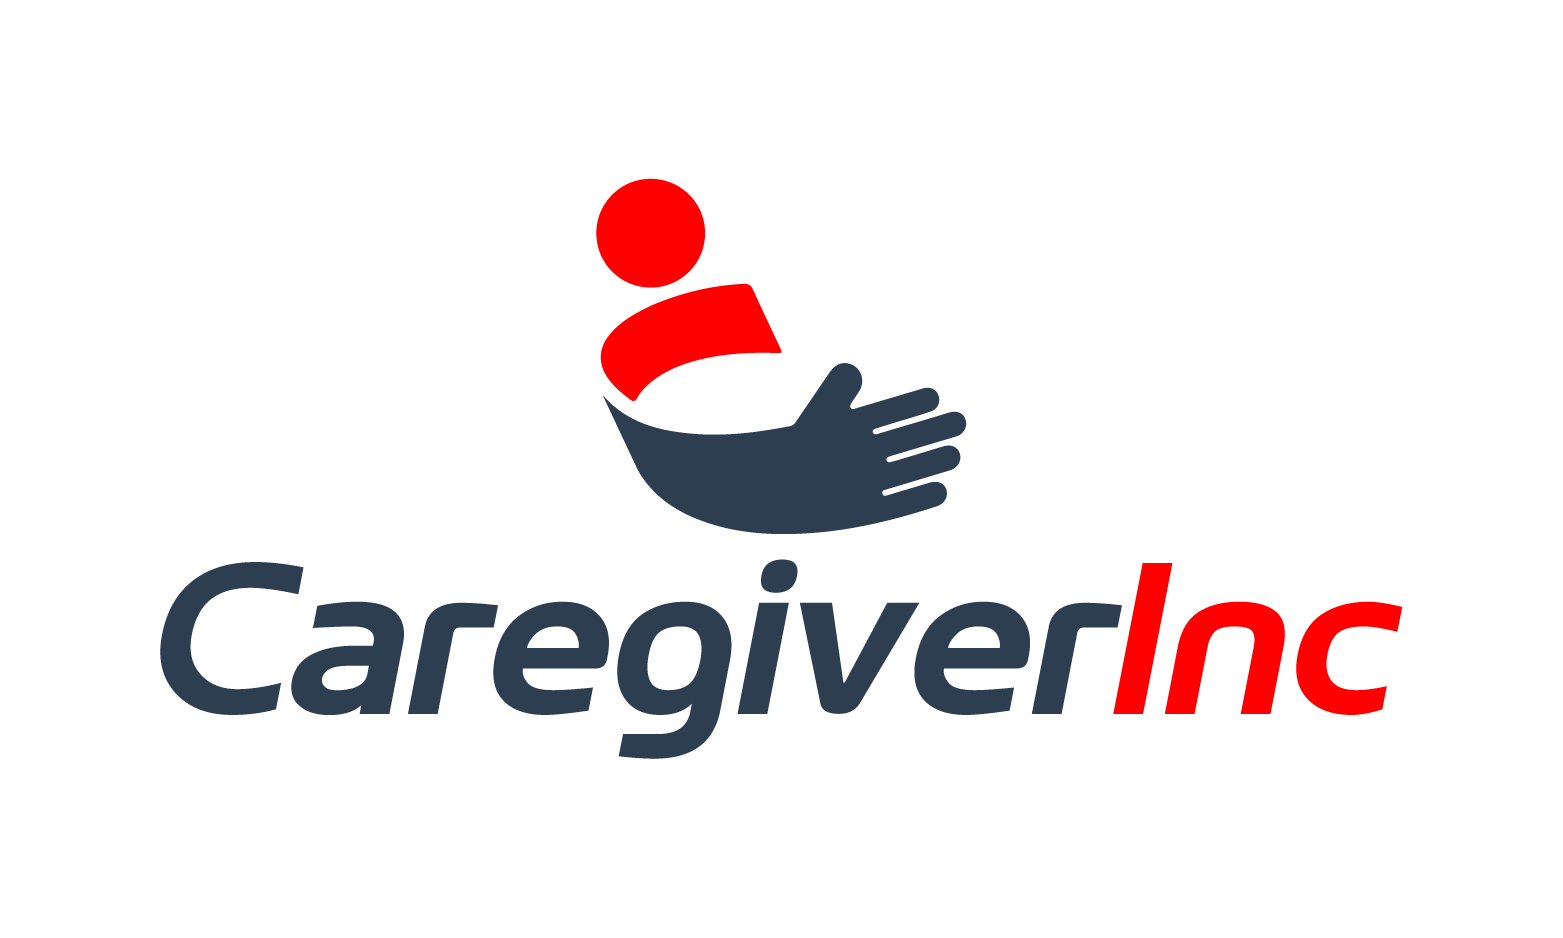 CaregiverInc.com - Creative brandable domain for sale